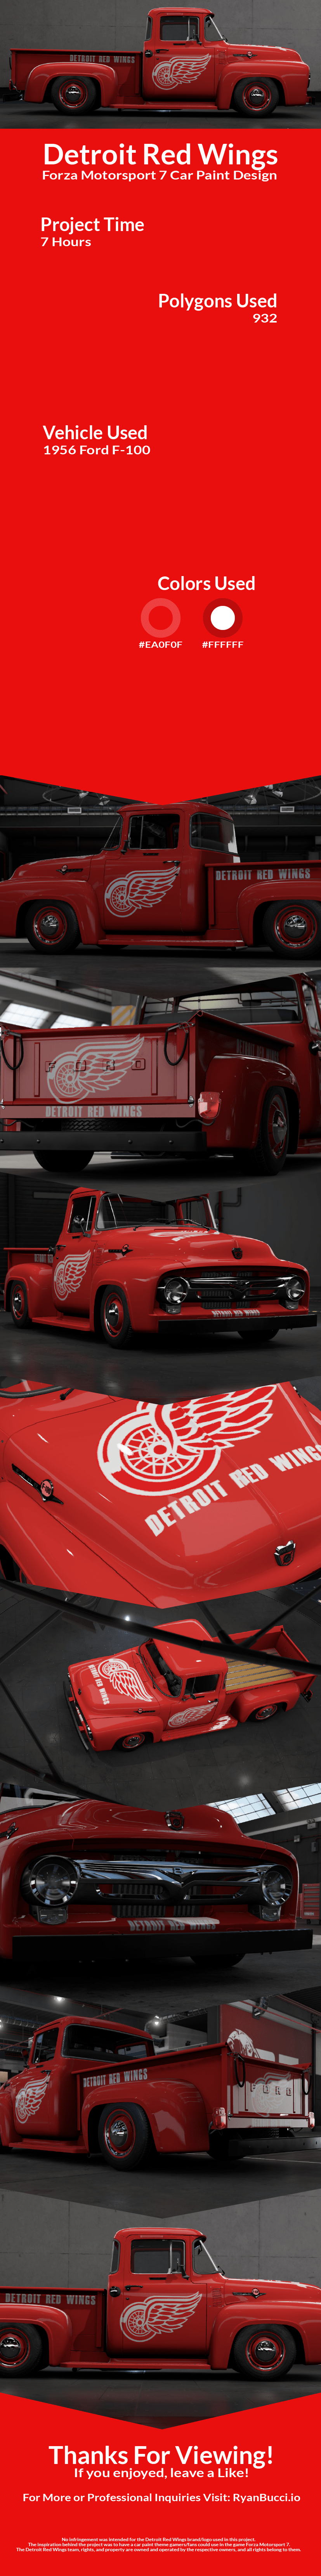 Detroit Red Wings Forza Design Presentation - Ryan Bucci Portfolio